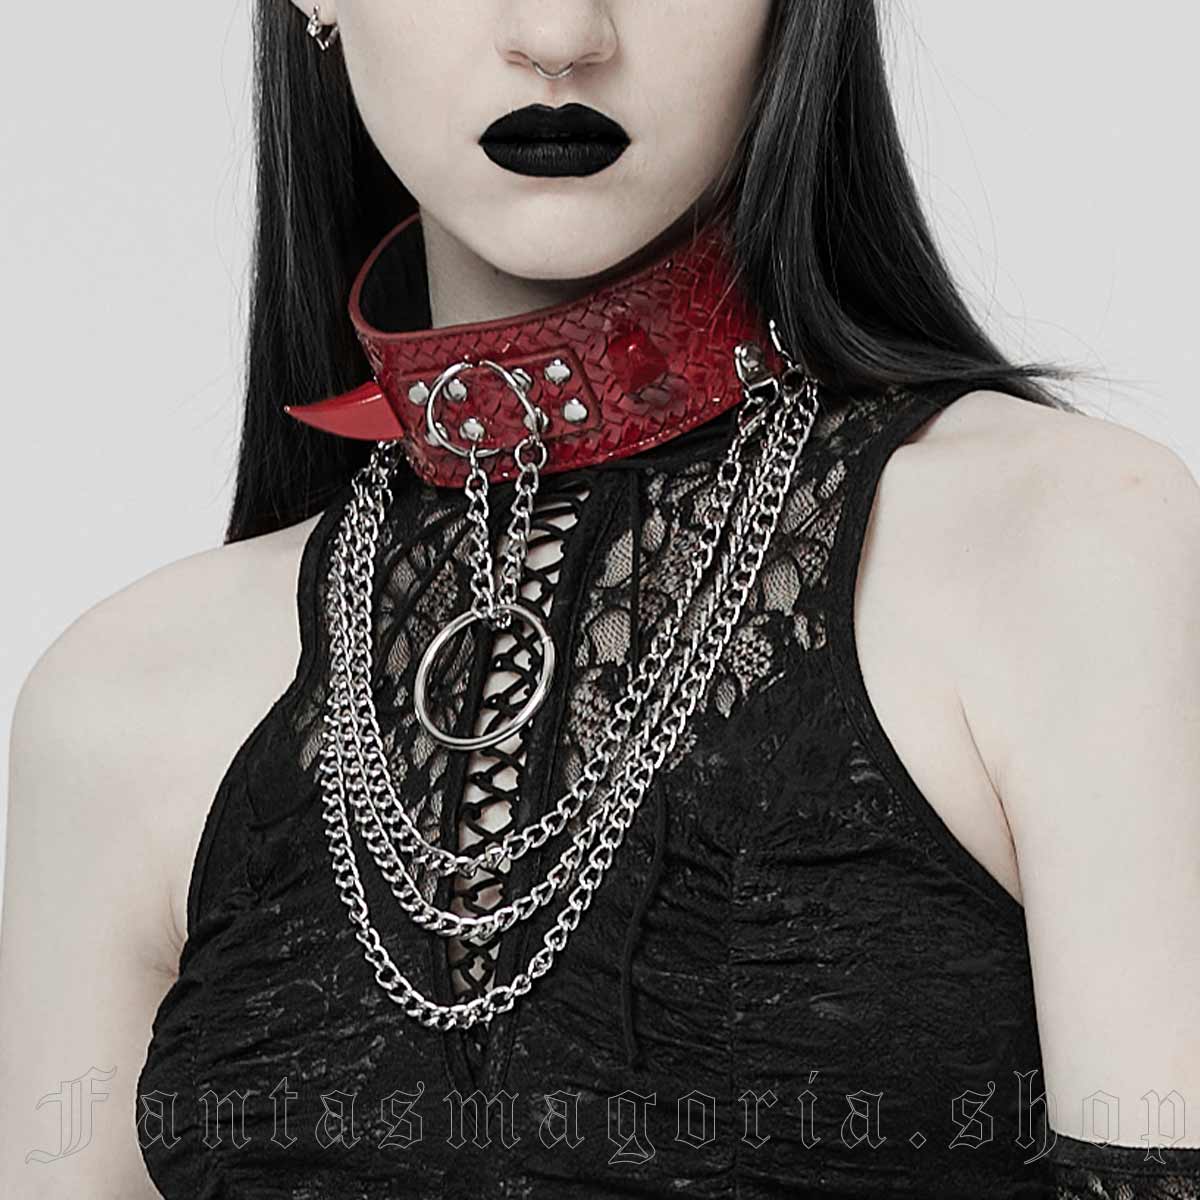 EYES Pastel Goth Halloween Choker With Chain Collar Alternative